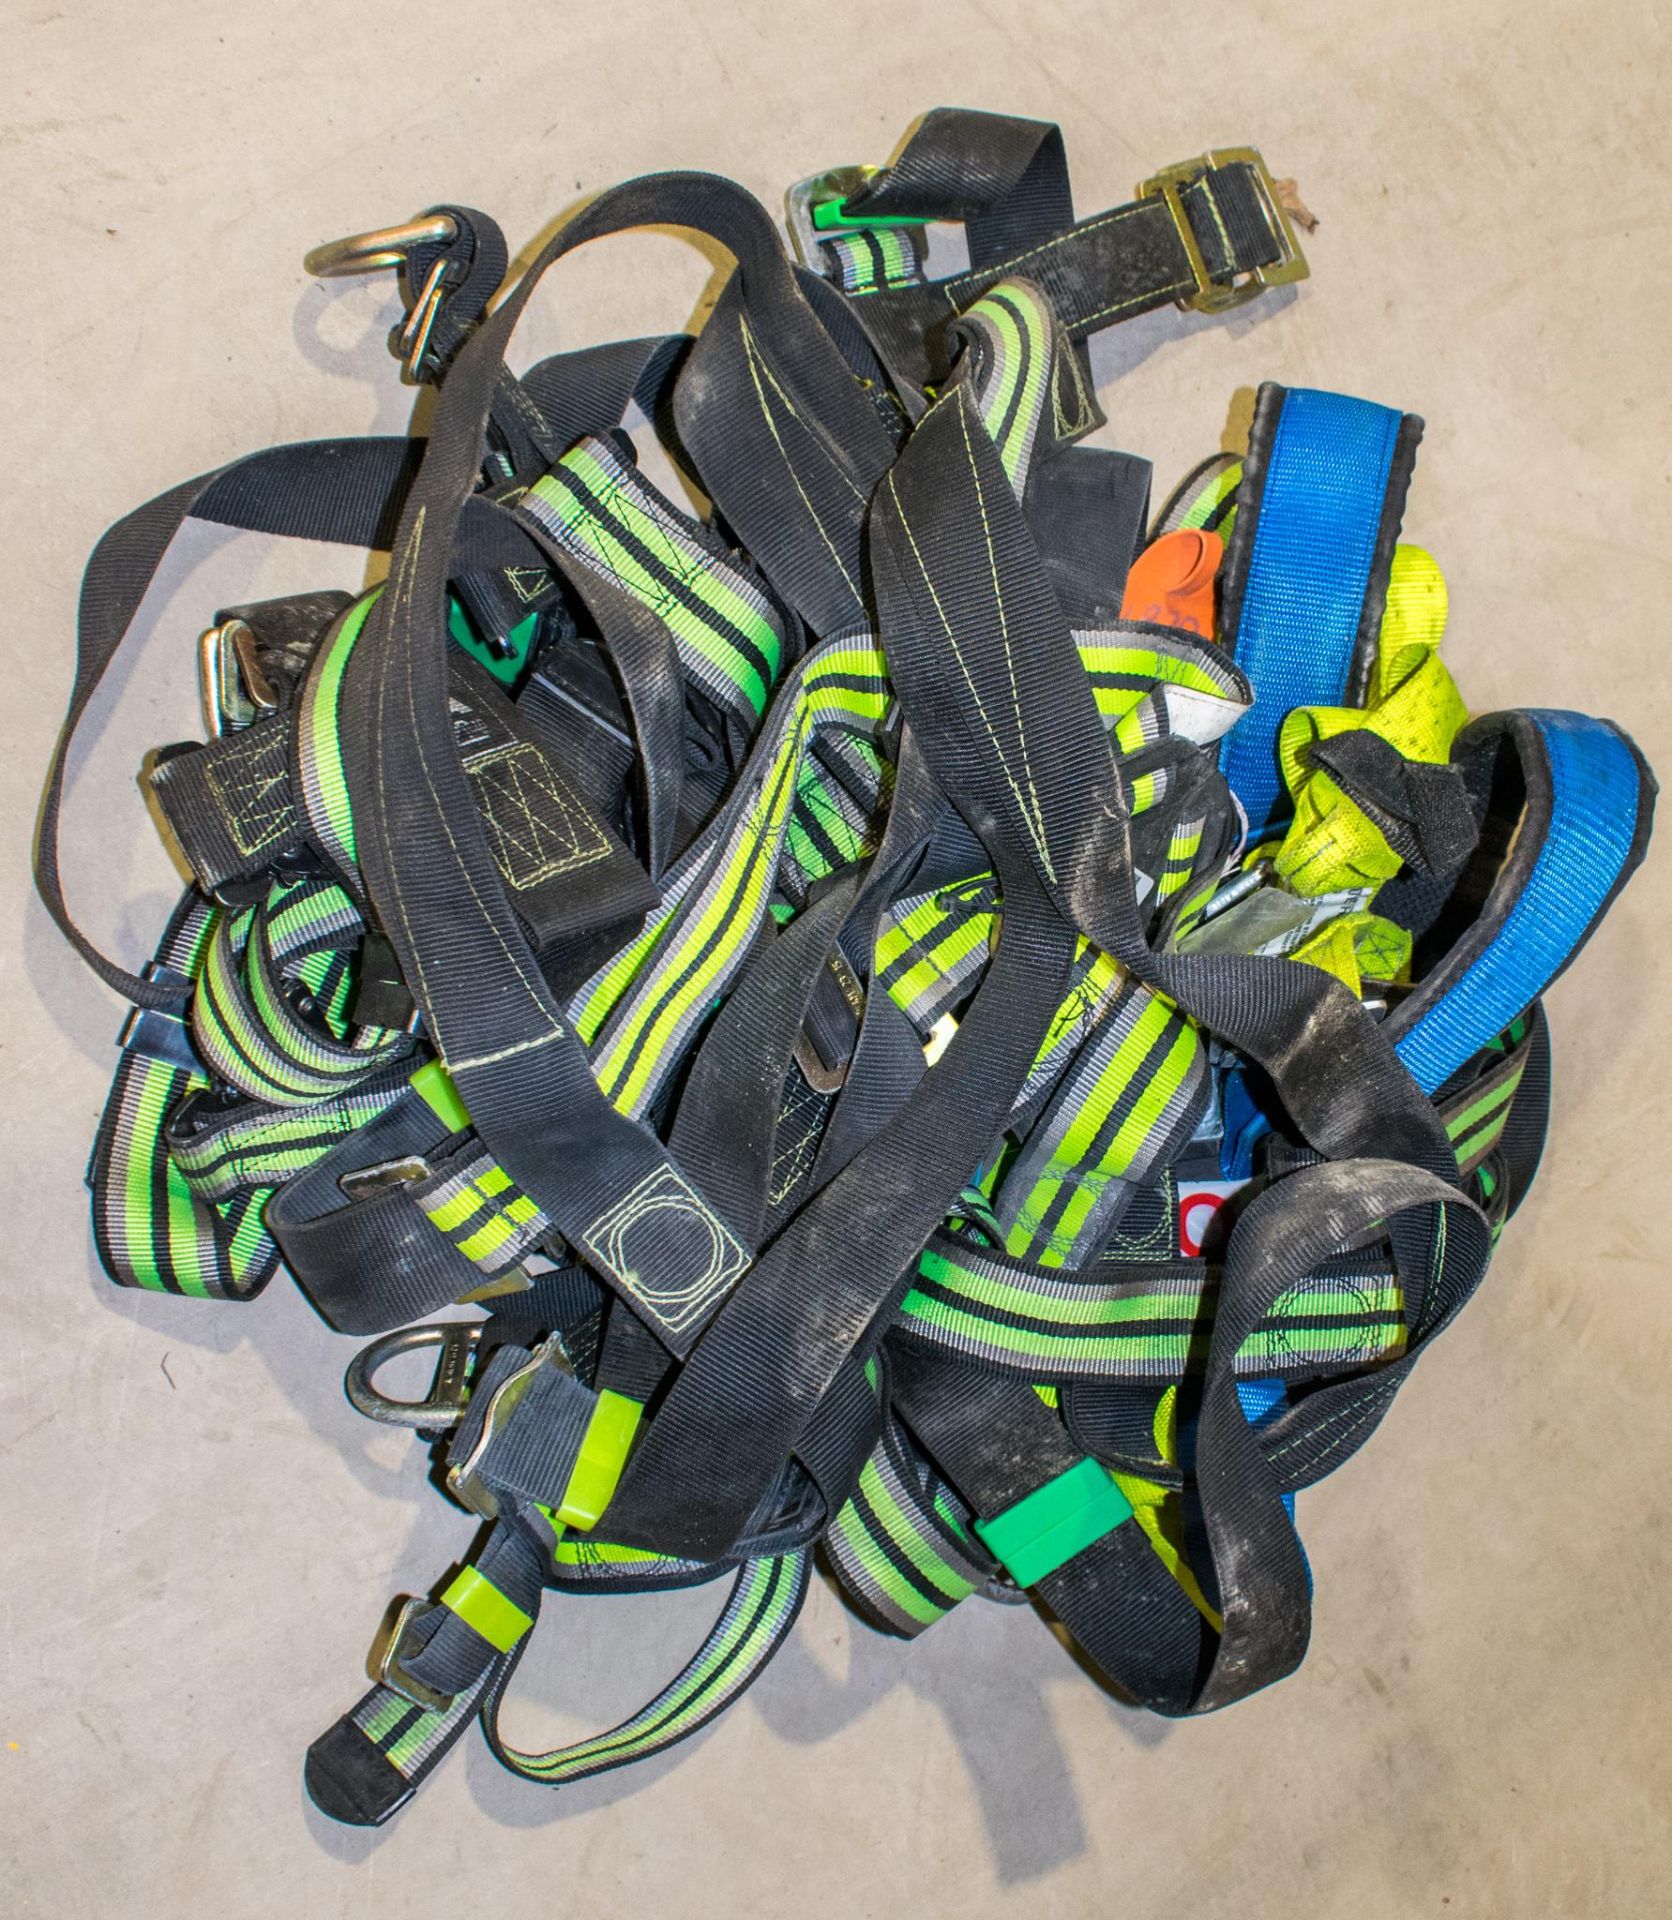 Quantity of fall arrest harnesses